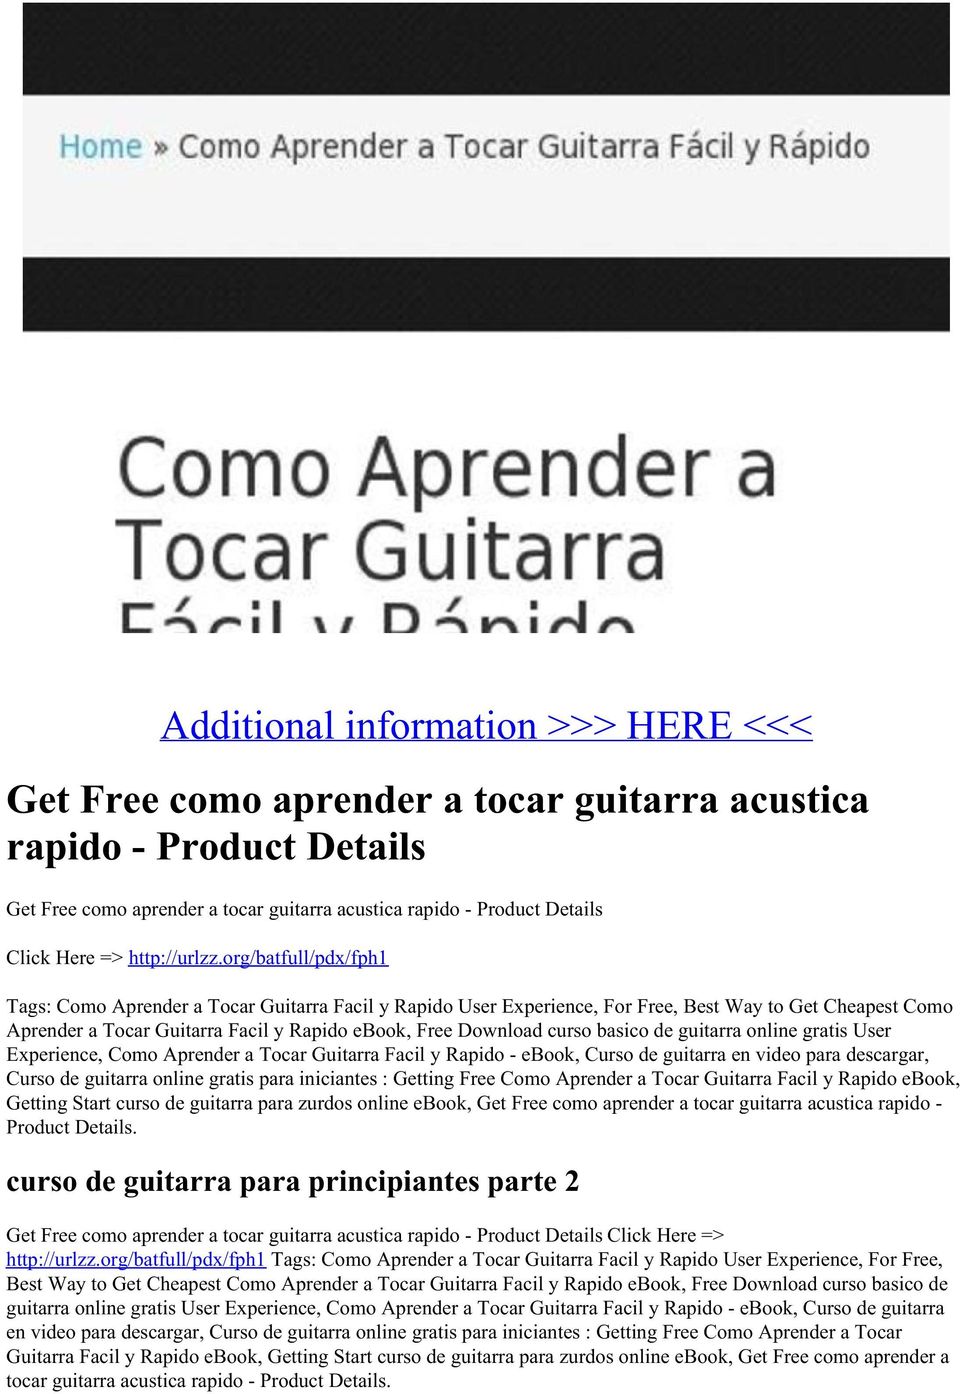 org/batfull/pdx/fph1 Tags: Como Aprender a Tocar Guitarra Facil y Rapido User Experience, For Free, Best Way to Get Cheapest Como Aprender a Tocar Guitarra Facil y Rapido ebook, Free Download curso